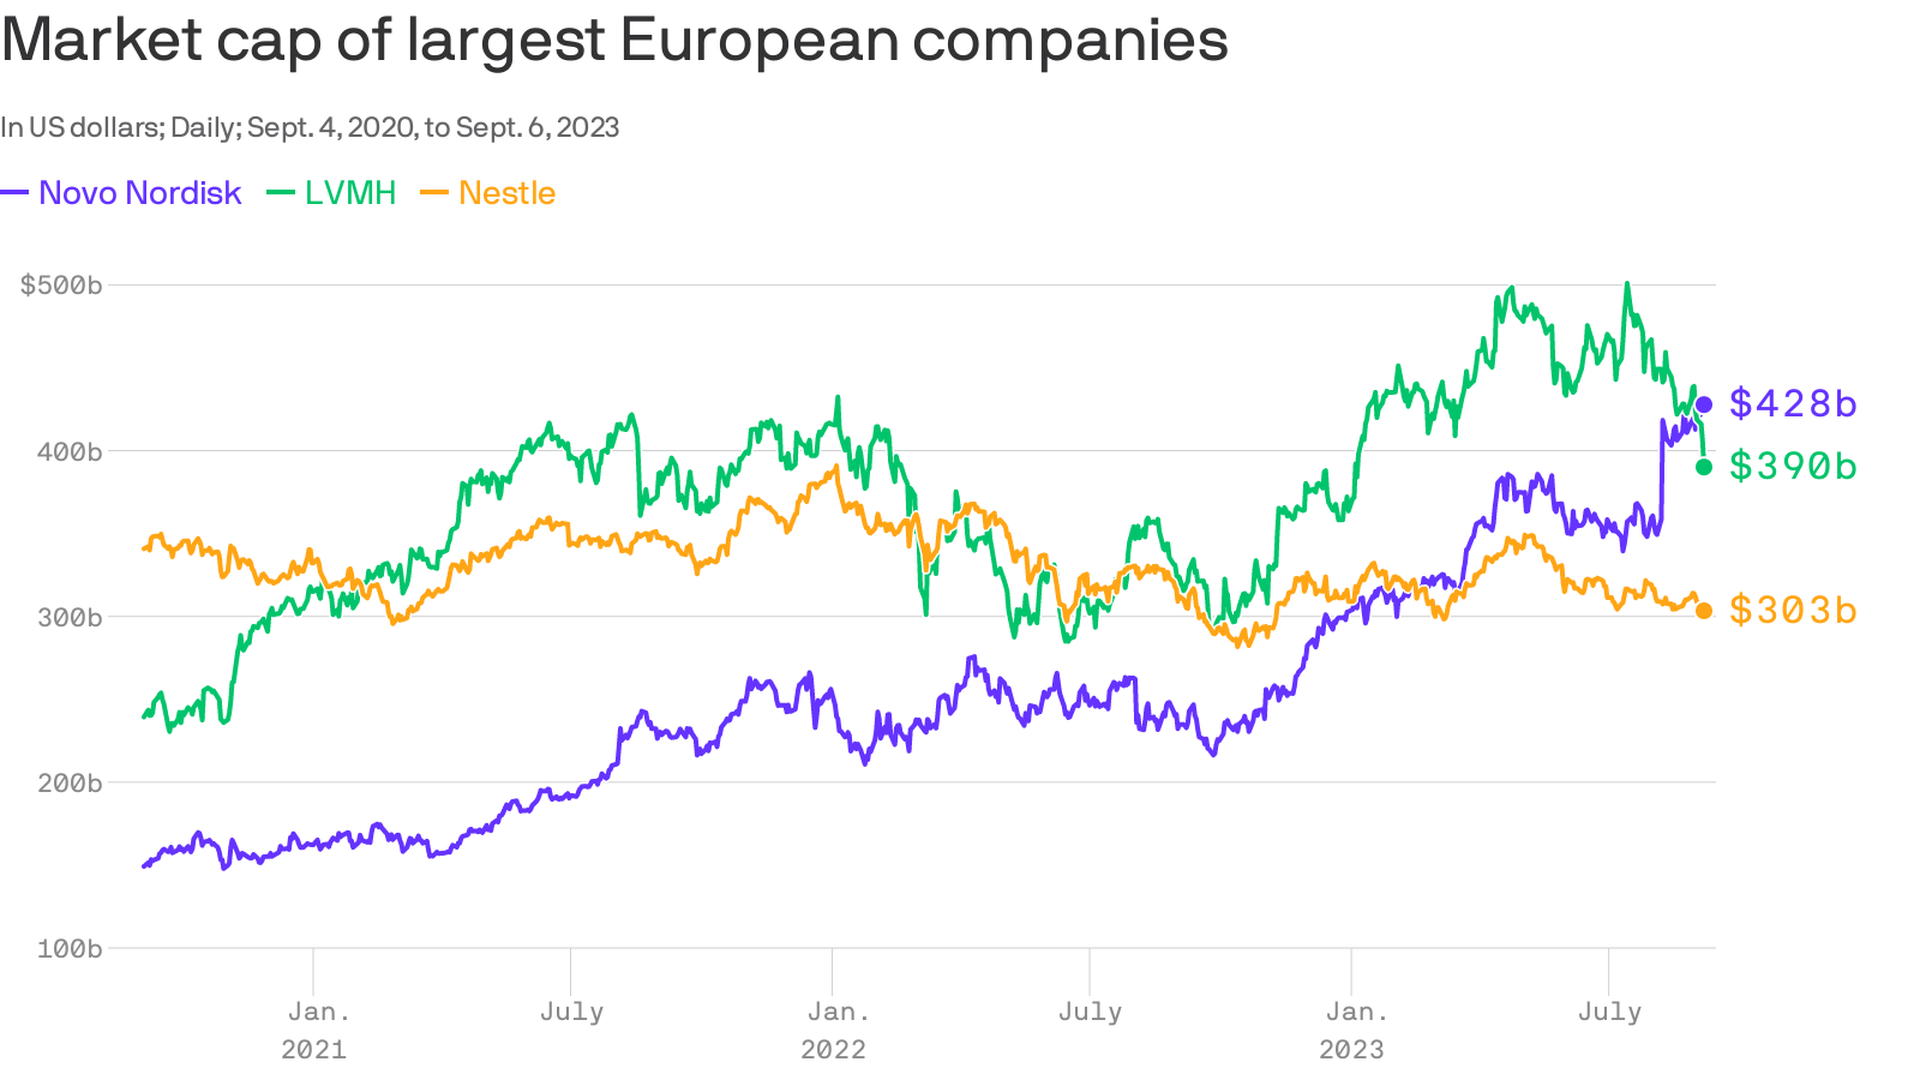 Novo Nordisk, maker of Ozempic, unseats LVMH as European stock